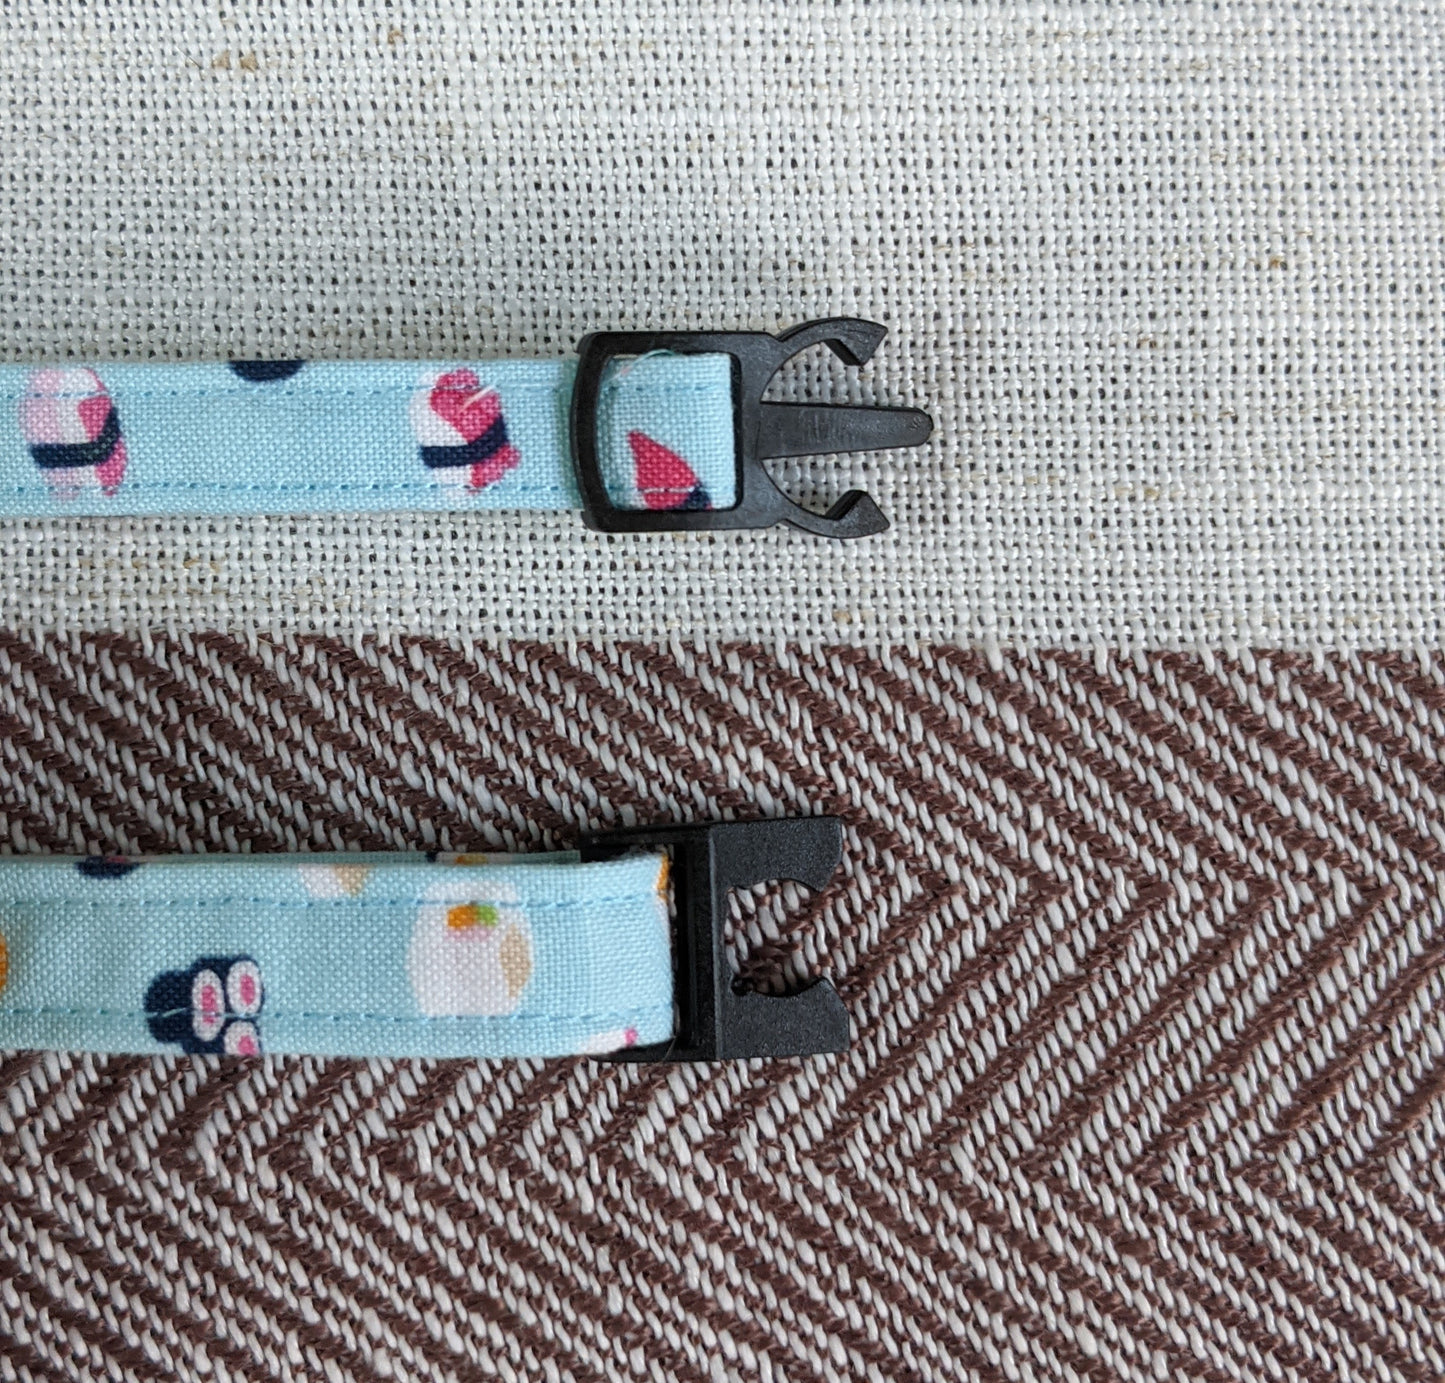 Sushi Print in Blue Cat Collar, Breakaway Safety Collar